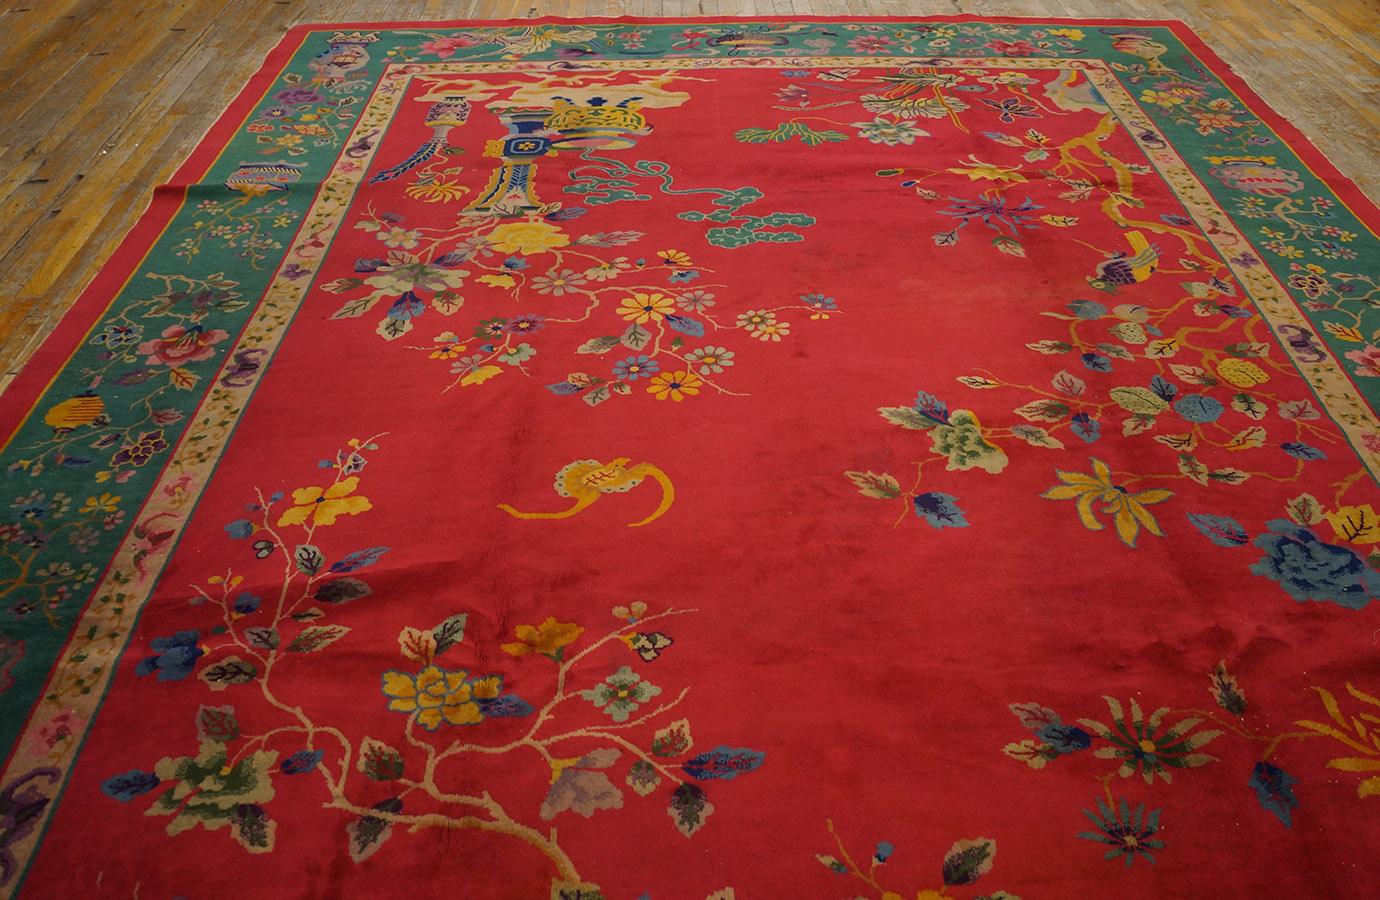 1920s Chinese Art Deco Carpet ( 9' x 11' 8'' - 275 x 355 cm ) For Sale 1